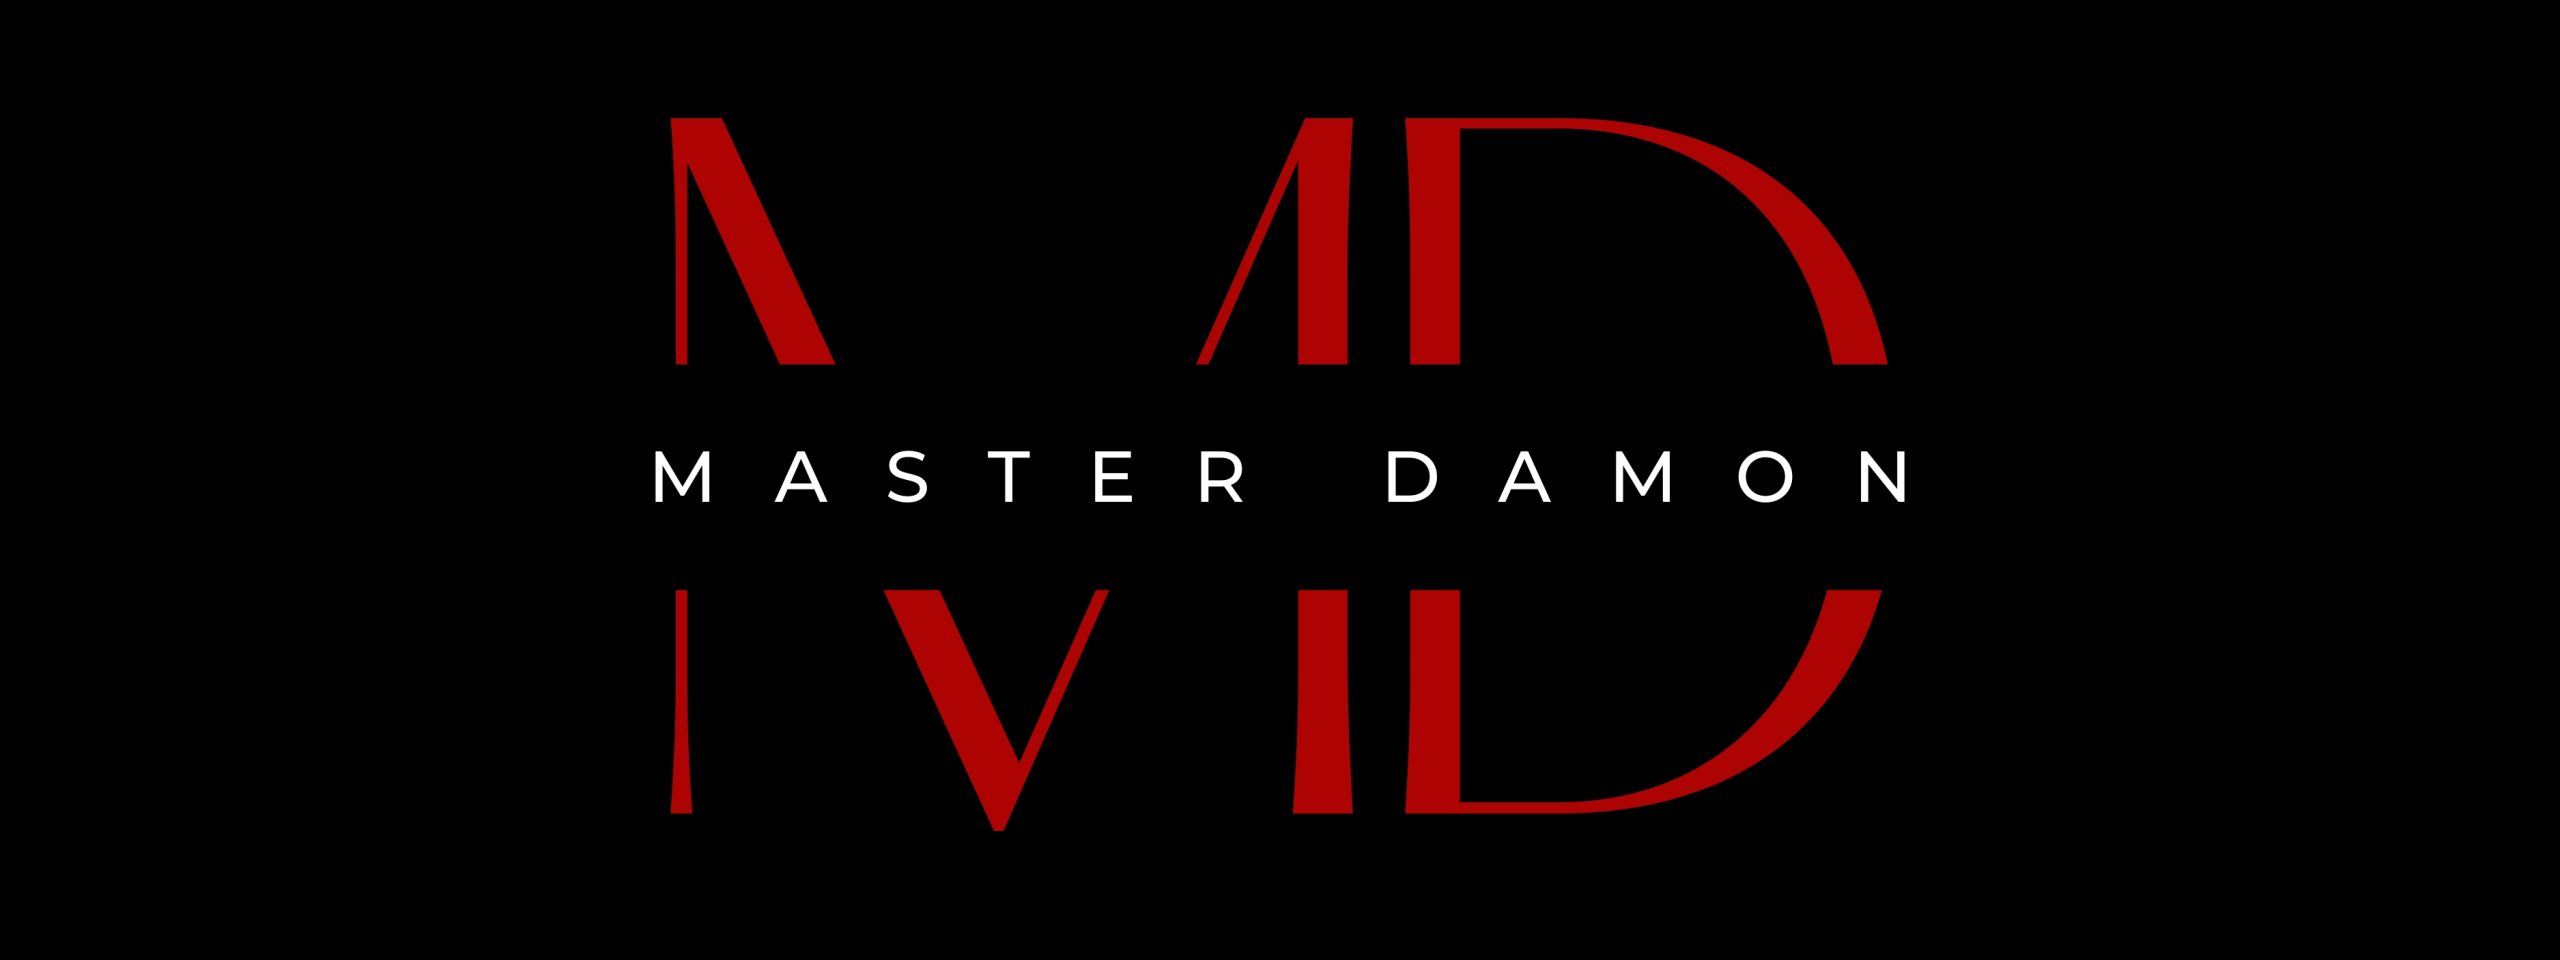 BDSM Master Damon